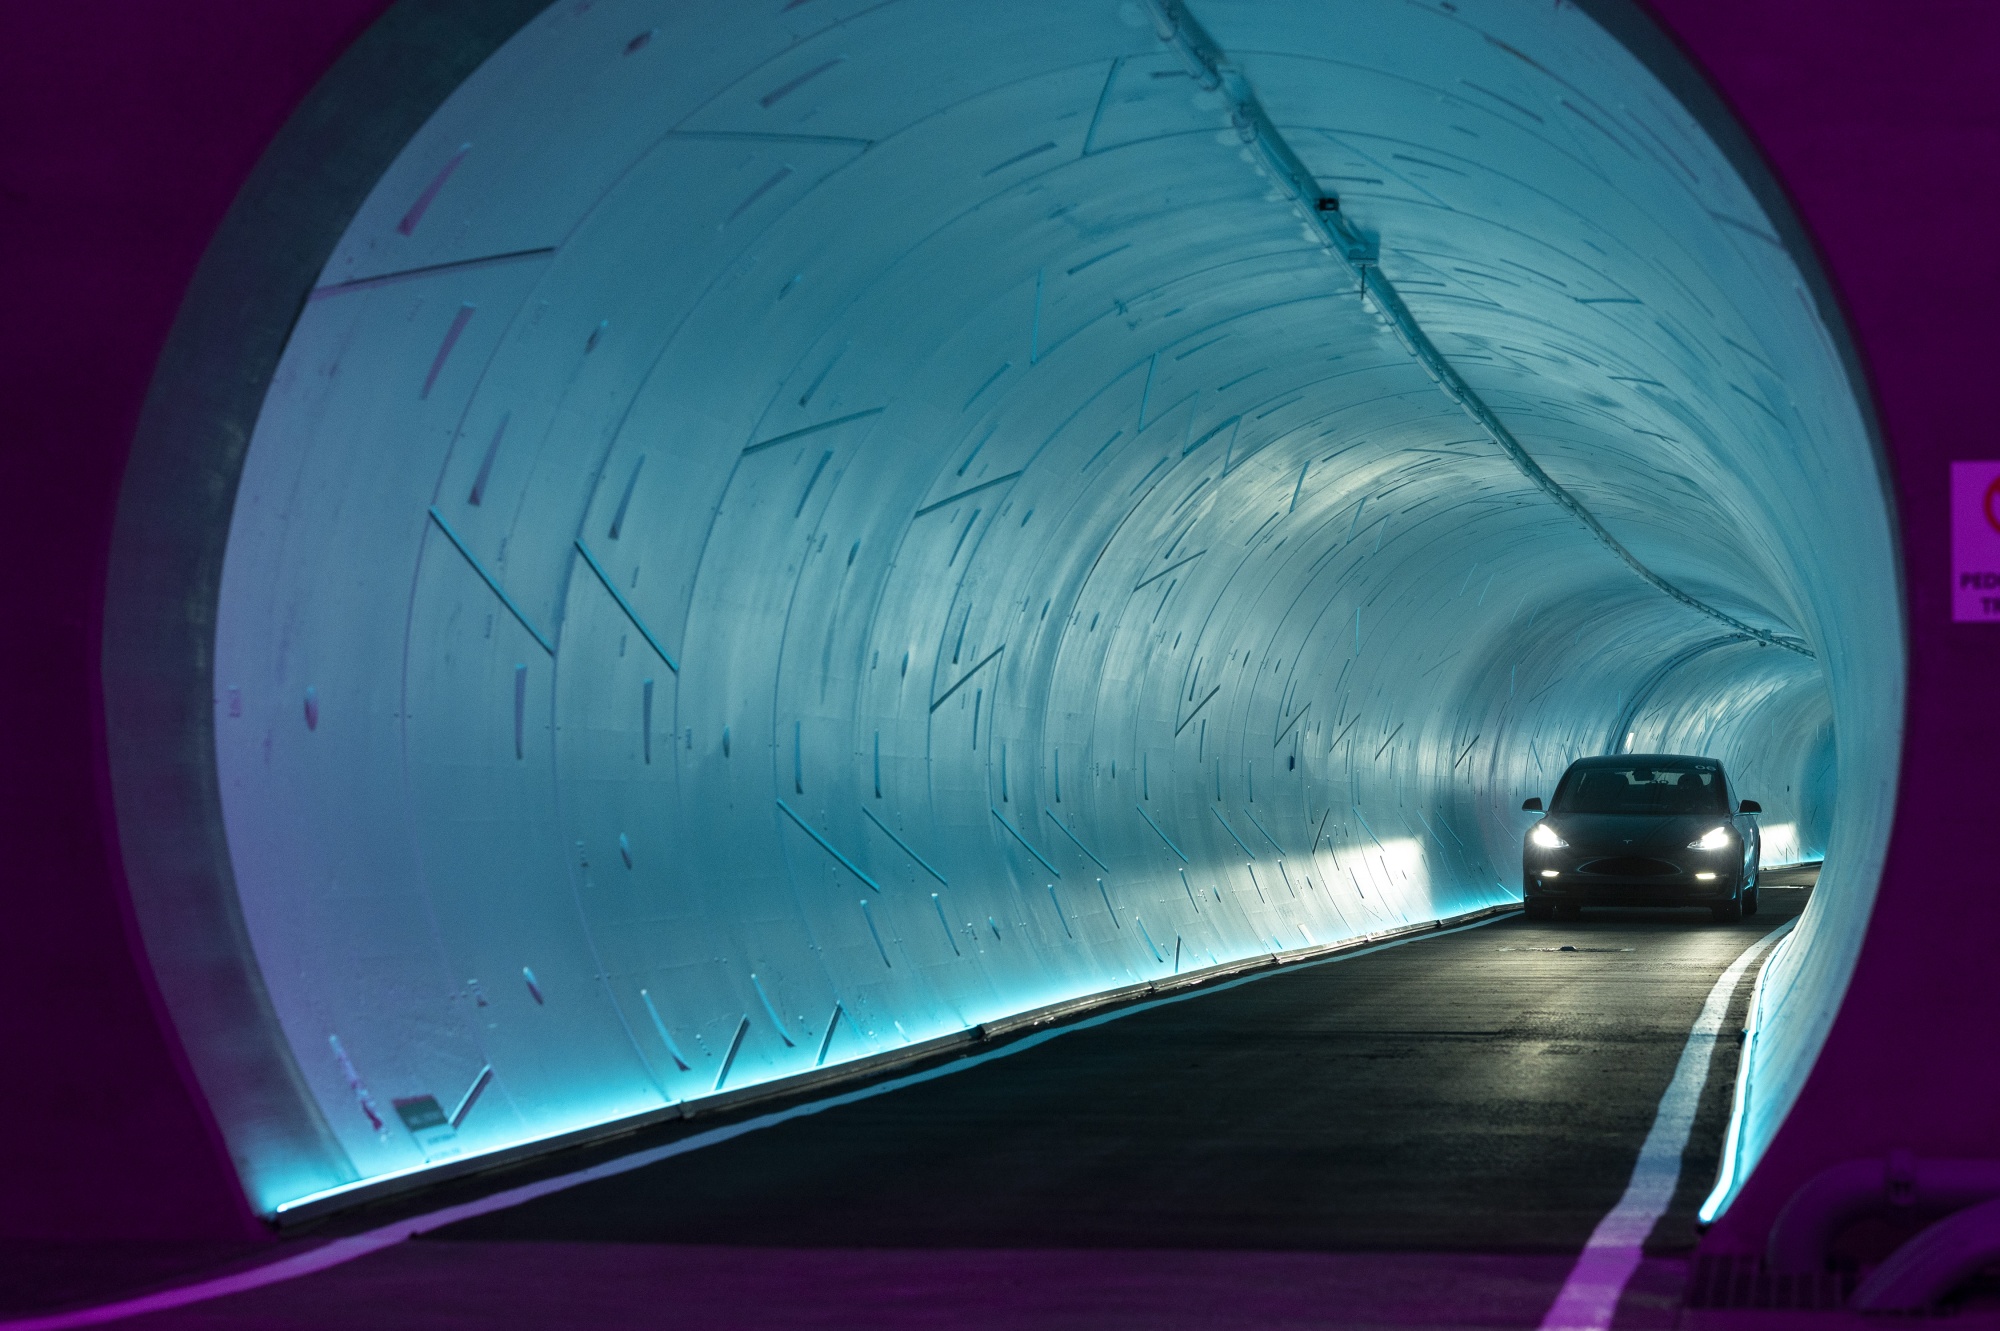 Taking a Ride in the Vegas Loop (Tesla Tunnel) 